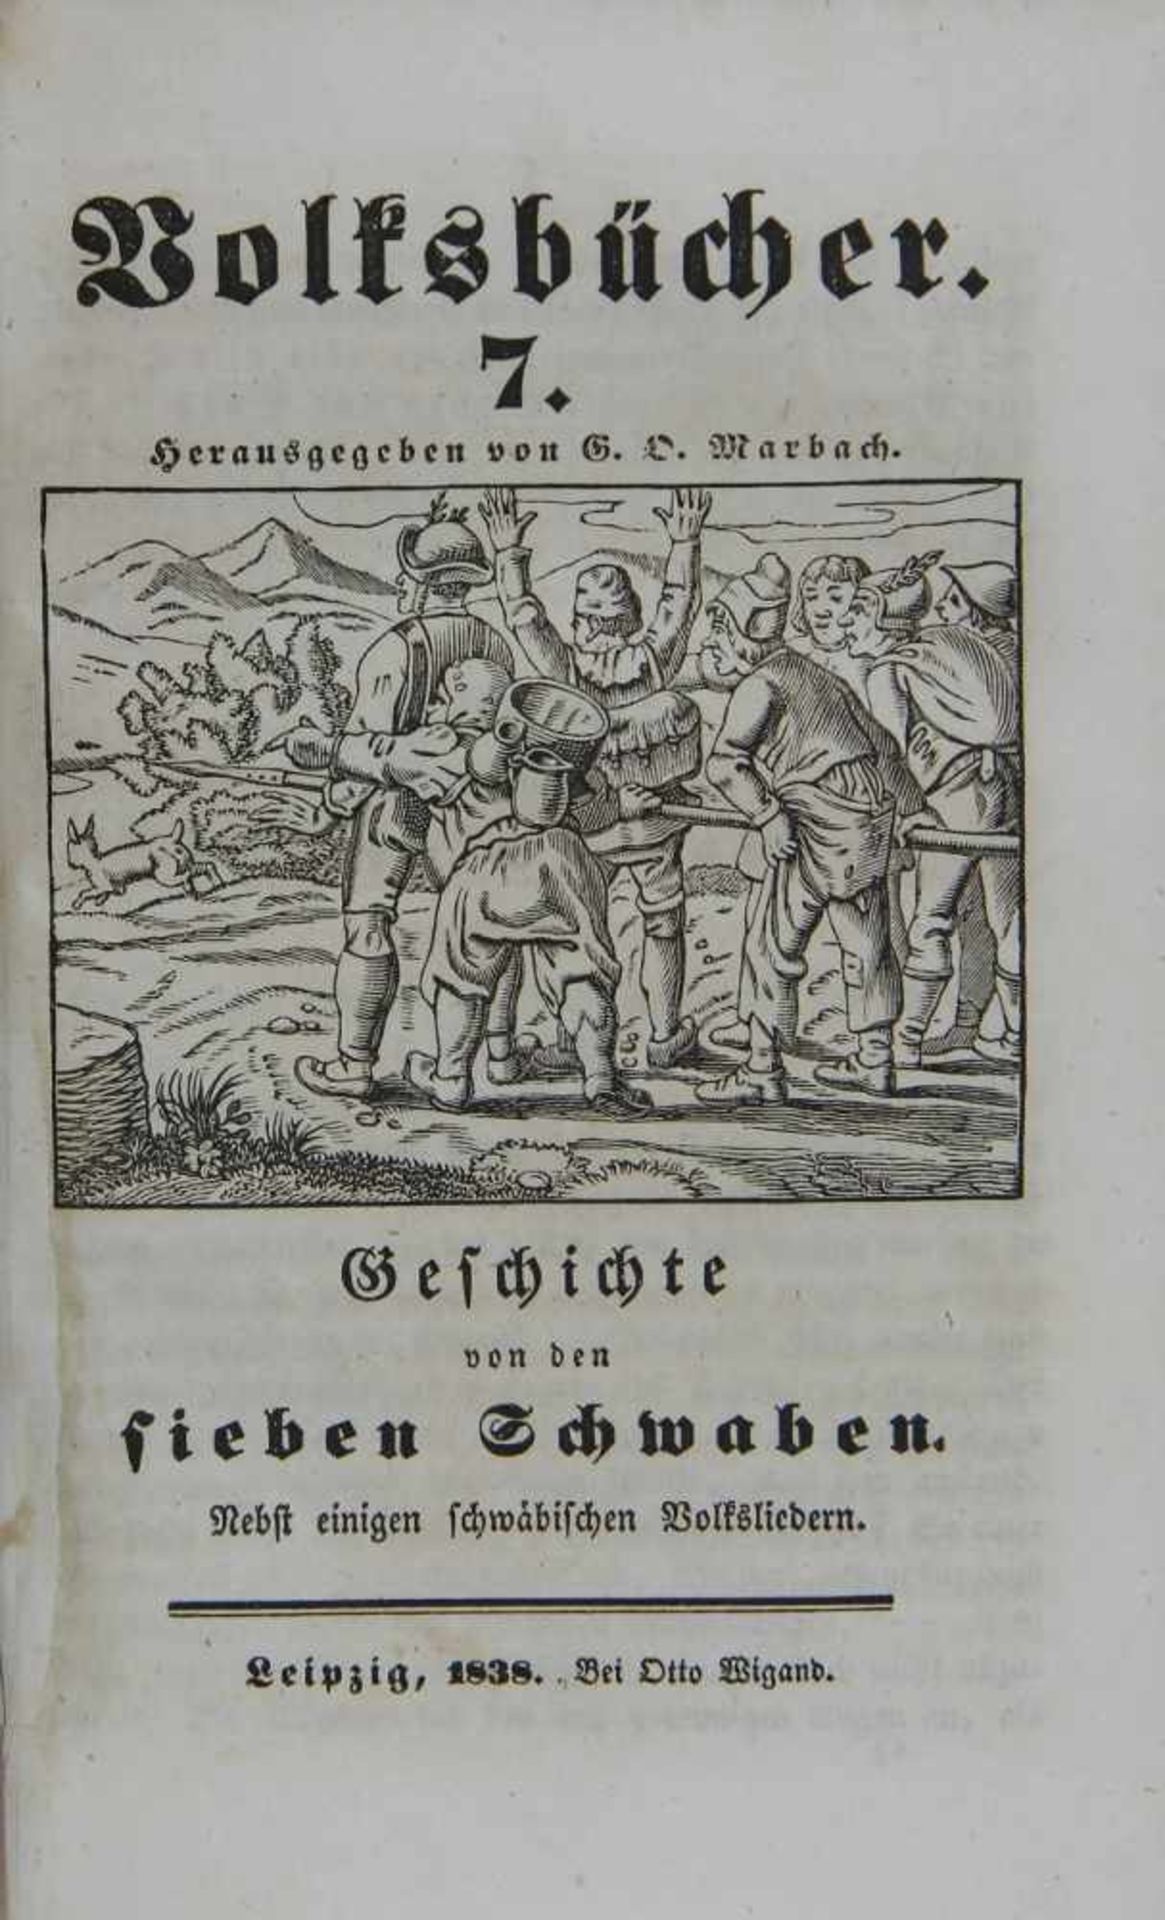 Marbach, G. O.: "Volksbücher" - Image 4 of 6